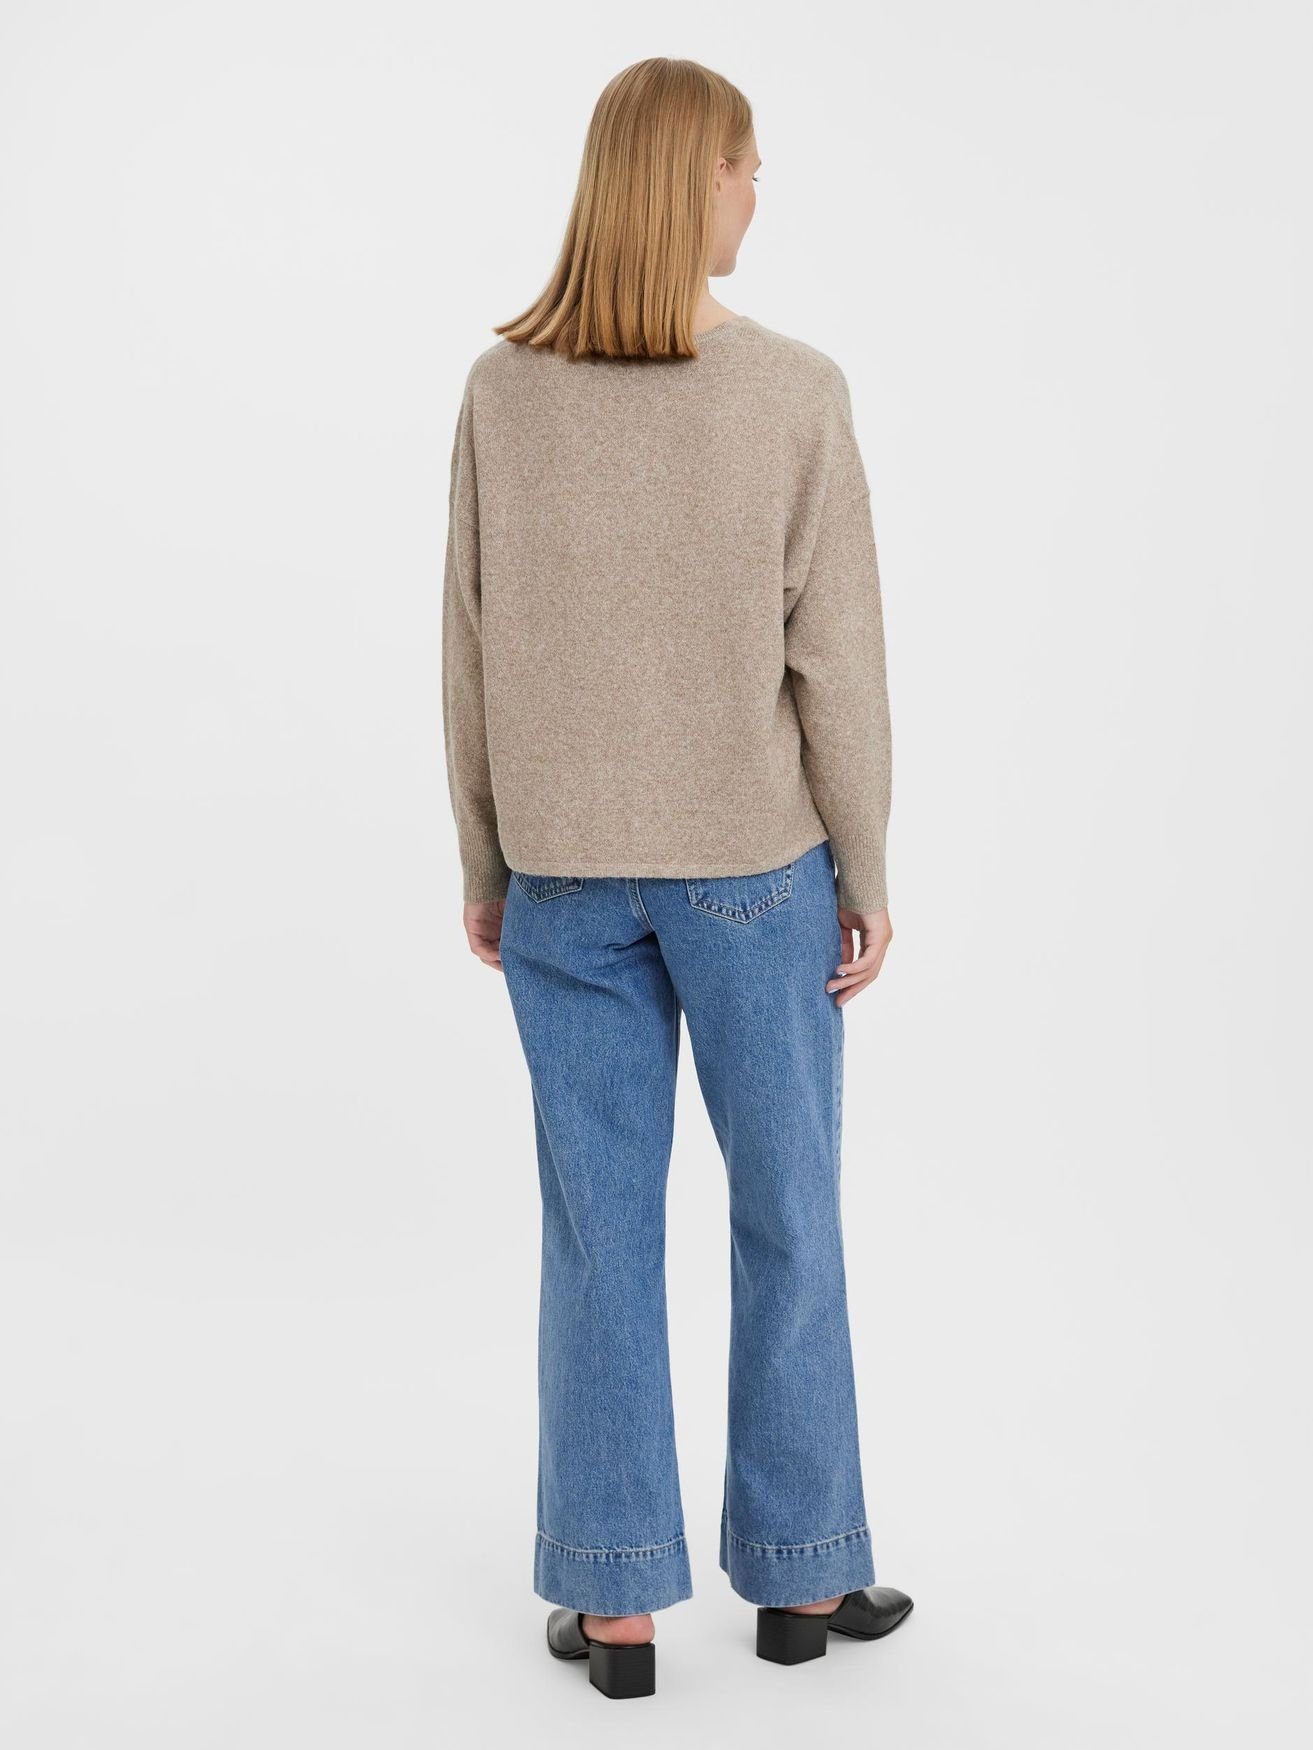 Strickpullover Langarm Sweater VMDOFFY Feinstrick 4852 Pullover V-Ausschnitt Vero in Moda Braun